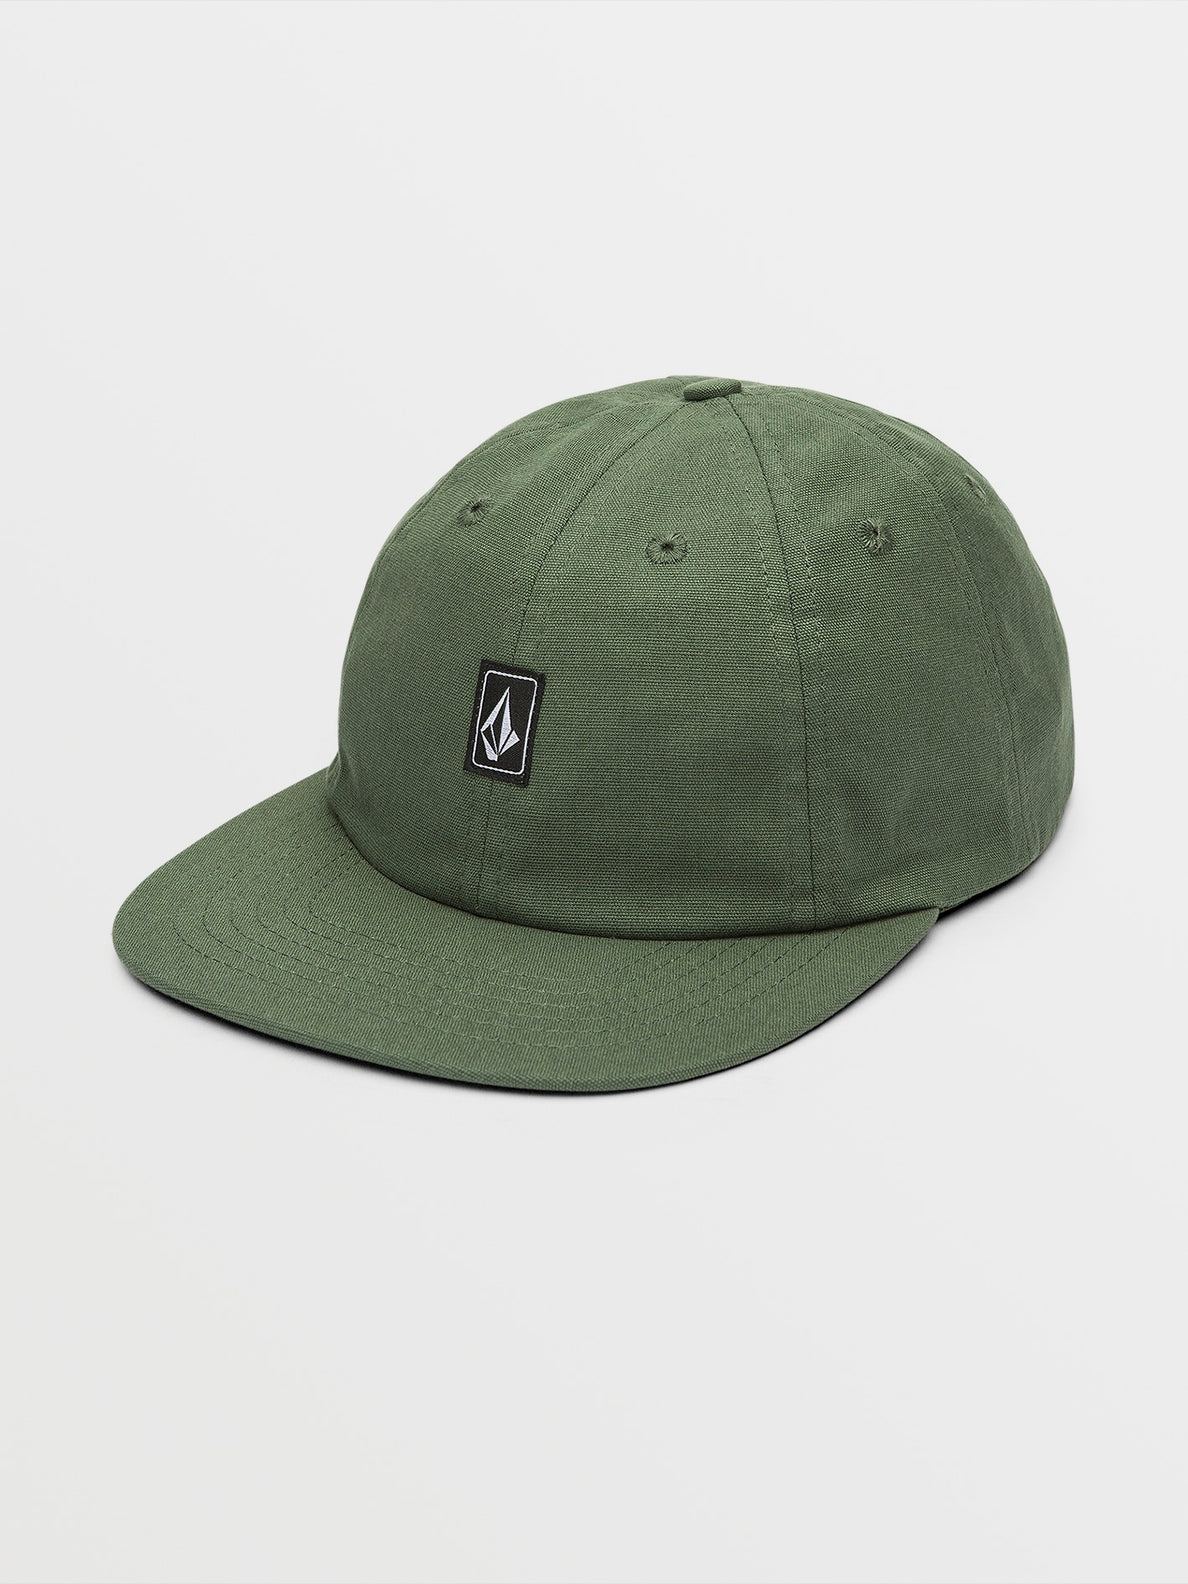 Ramp Stone Adjustable Hat - Fir Green